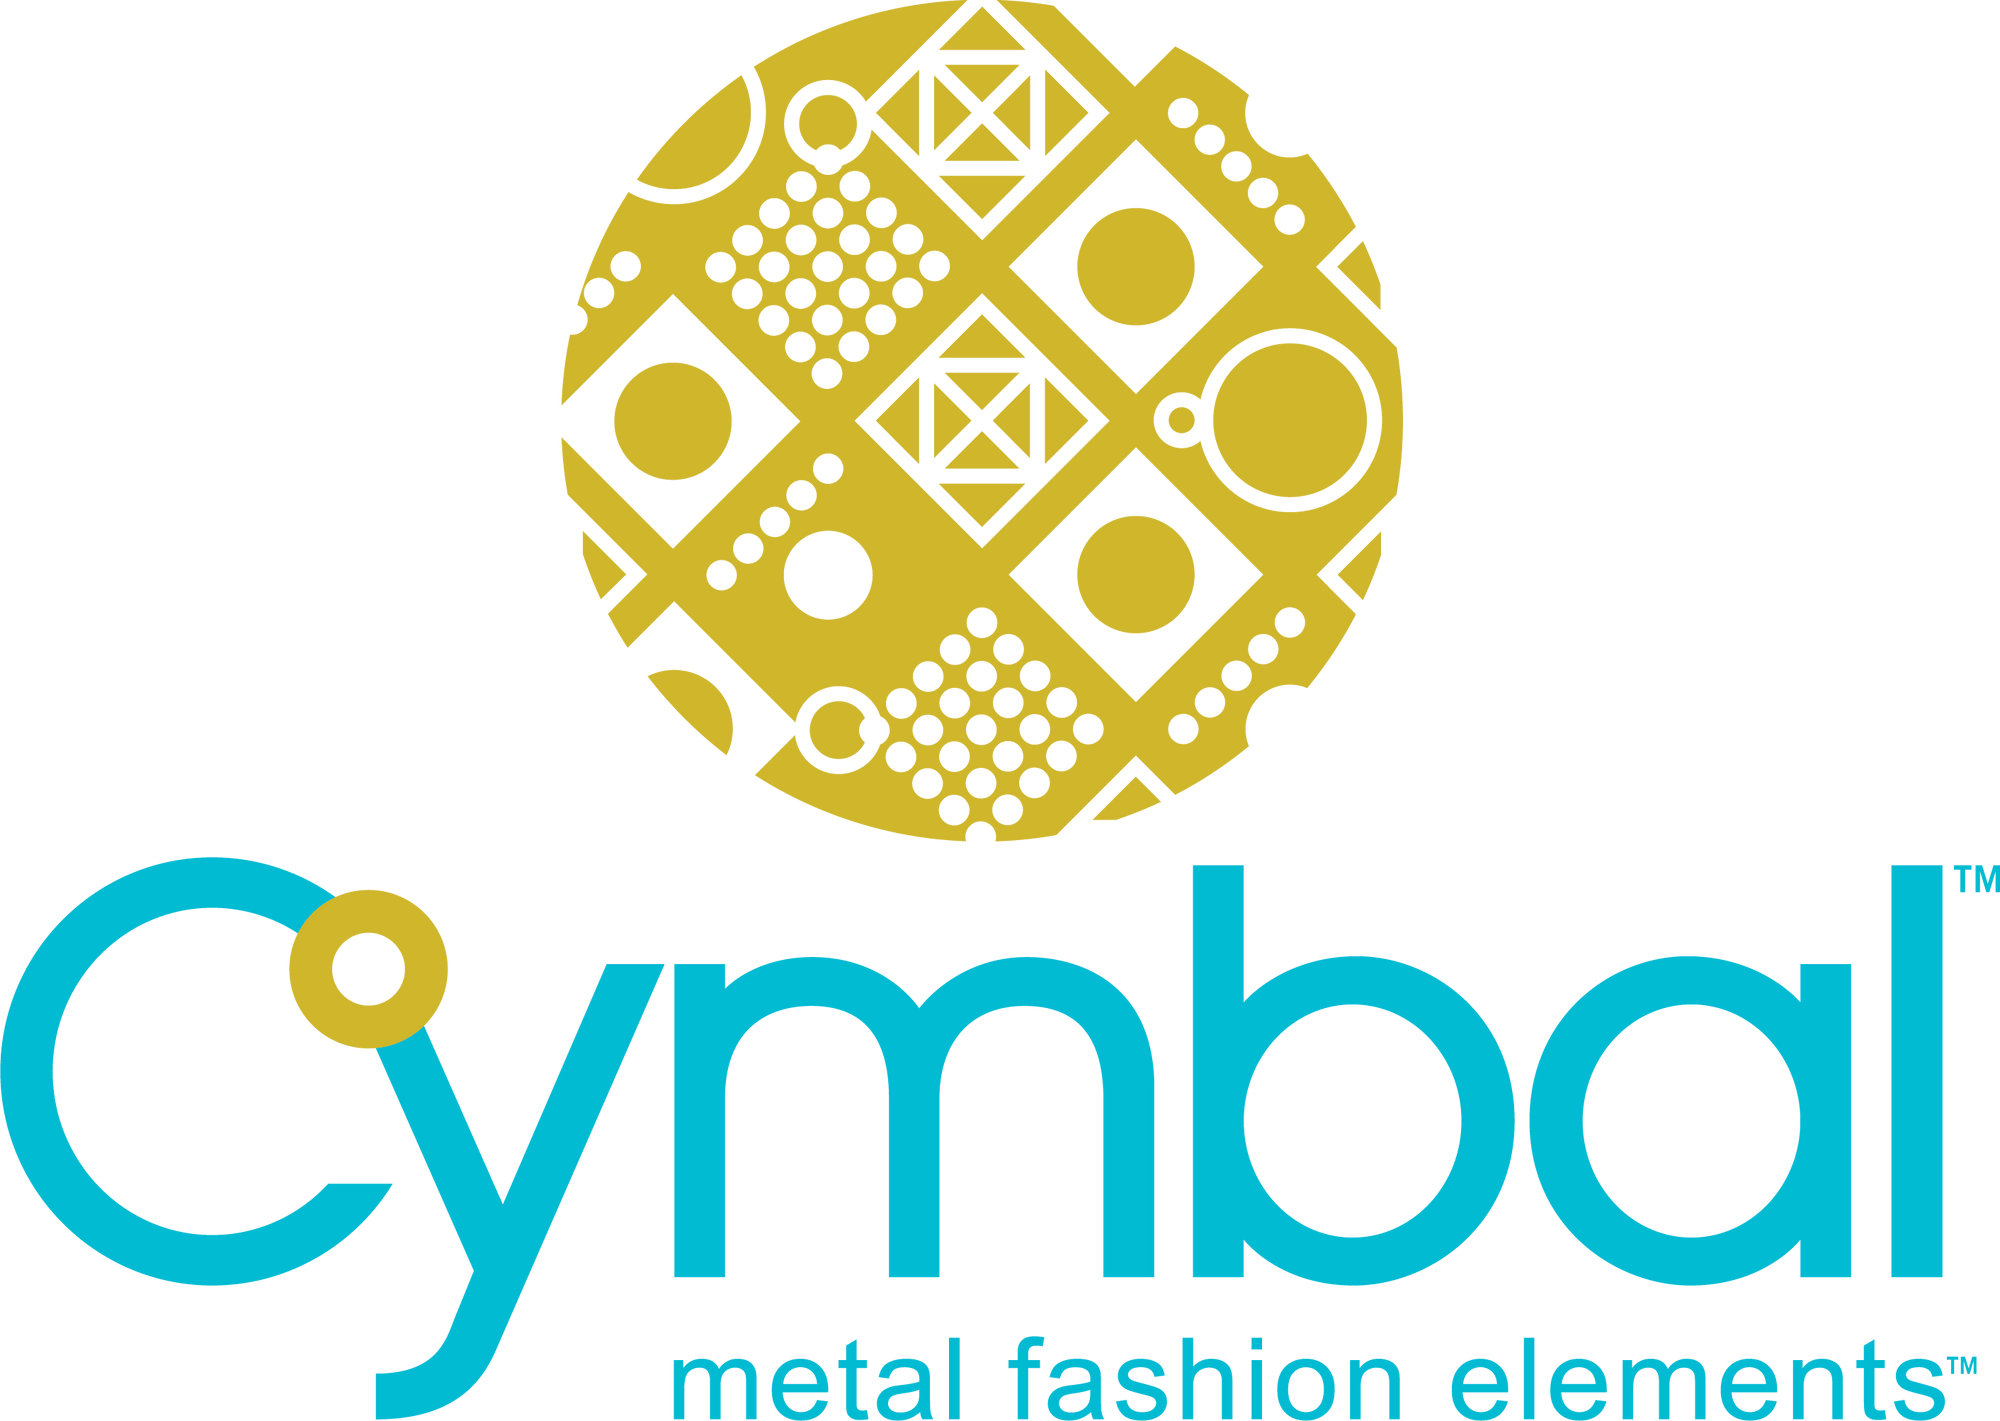 Cymbal Metal Fashion Elements